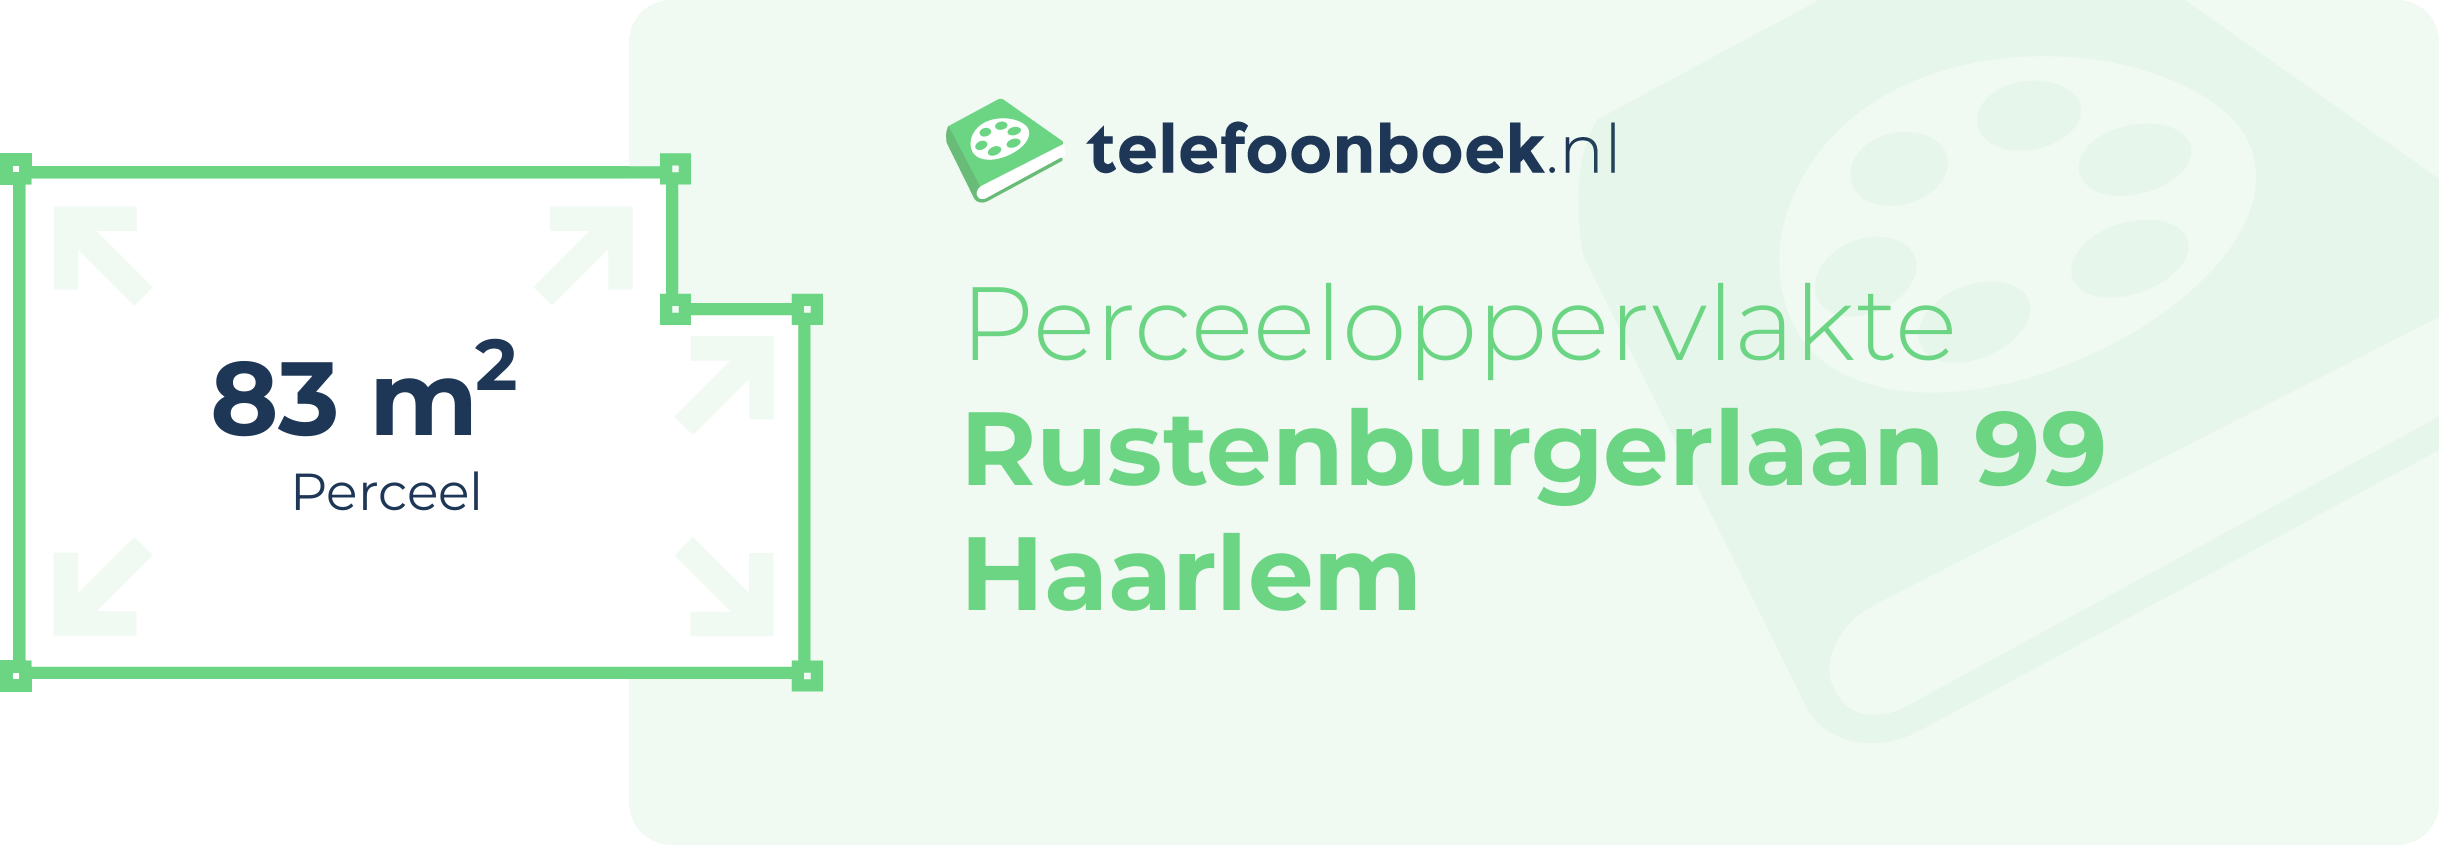 Perceeloppervlakte Rustenburgerlaan 99 Haarlem